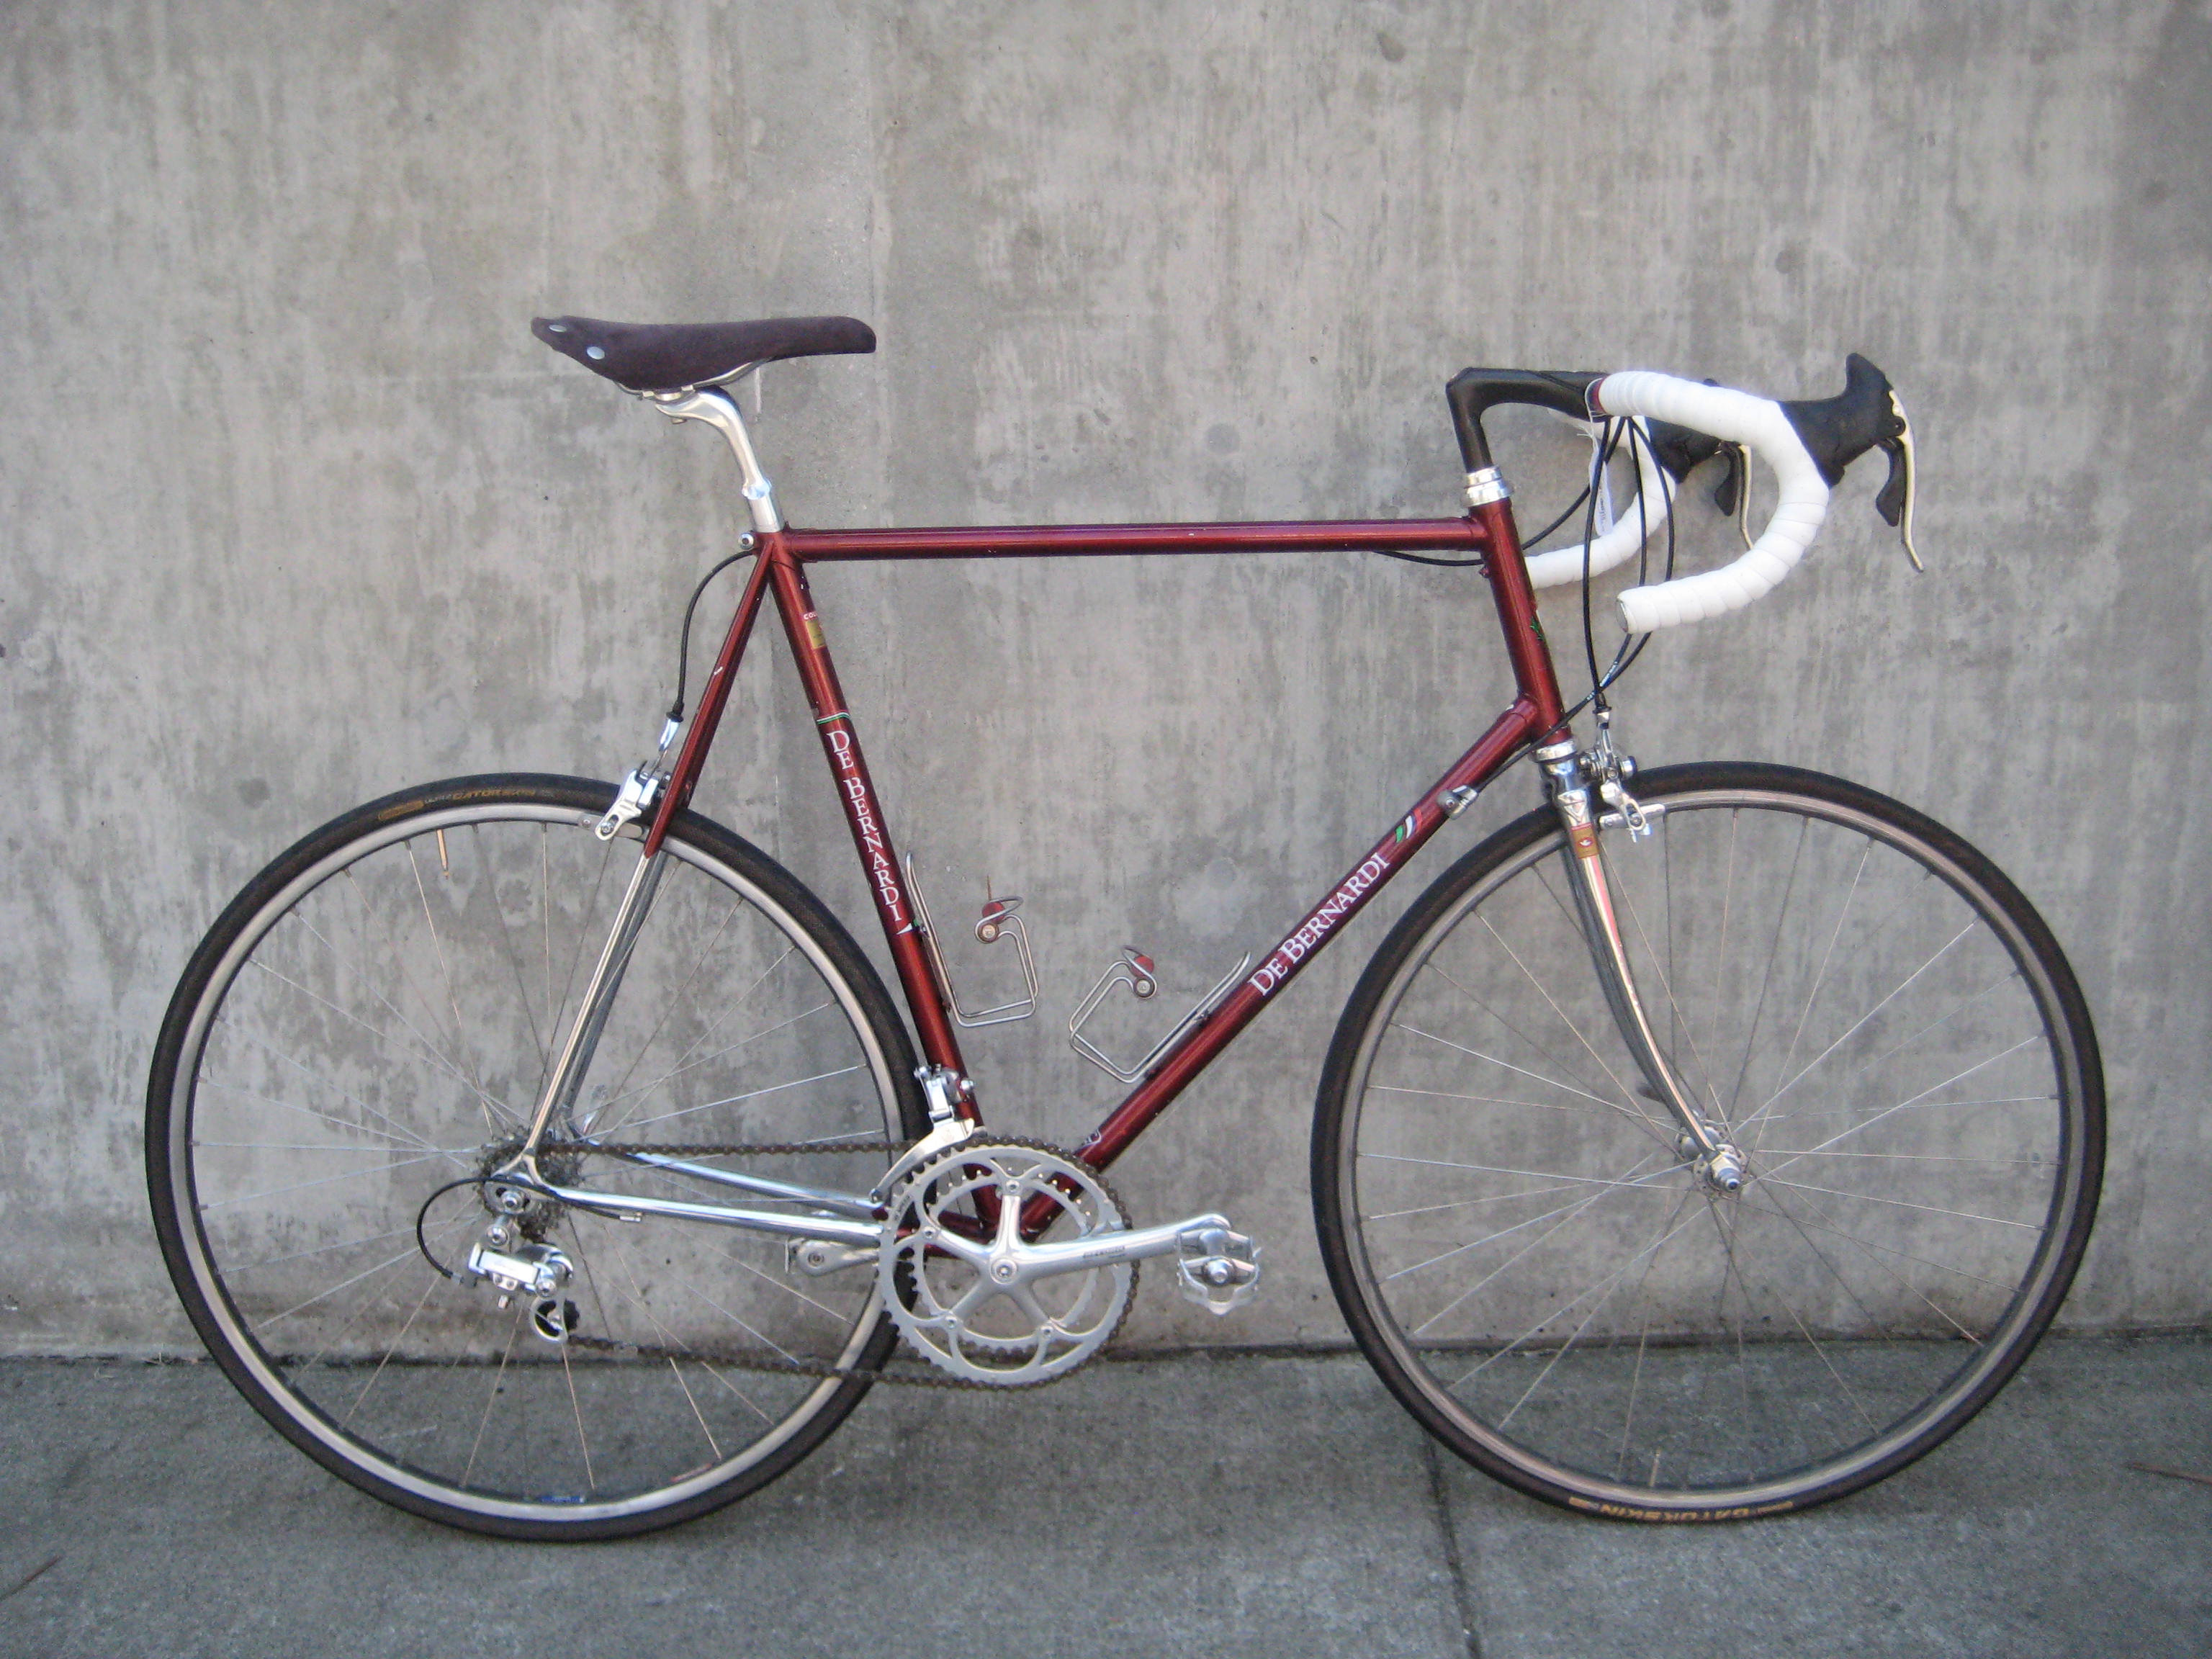 61cm bike frame